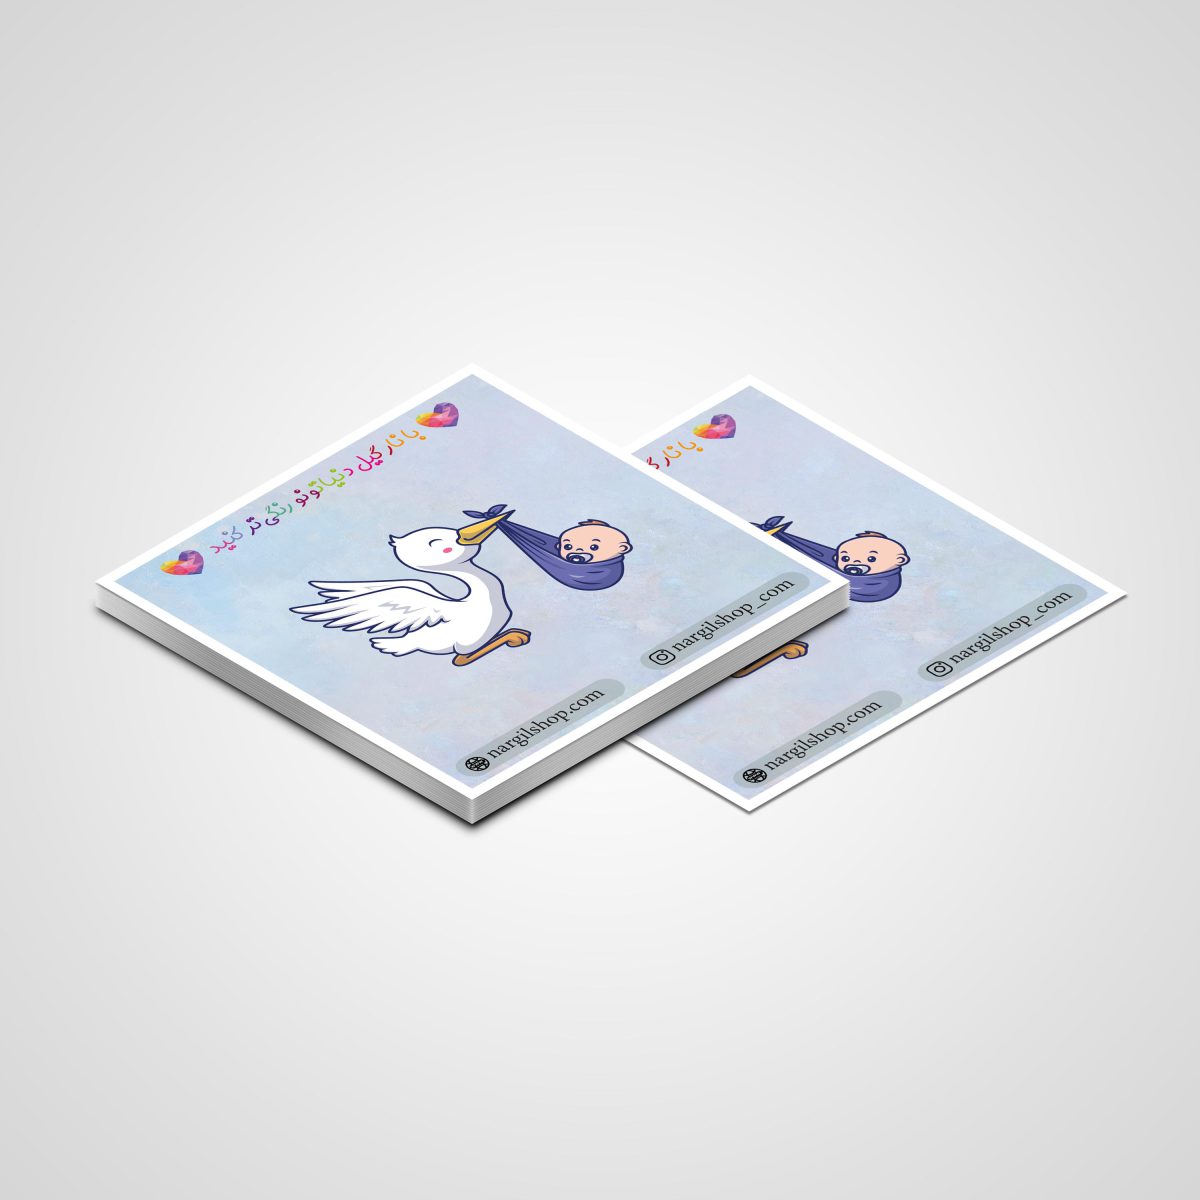 استیکر لک لک و بچه 01 | Stork and baby sticker 01